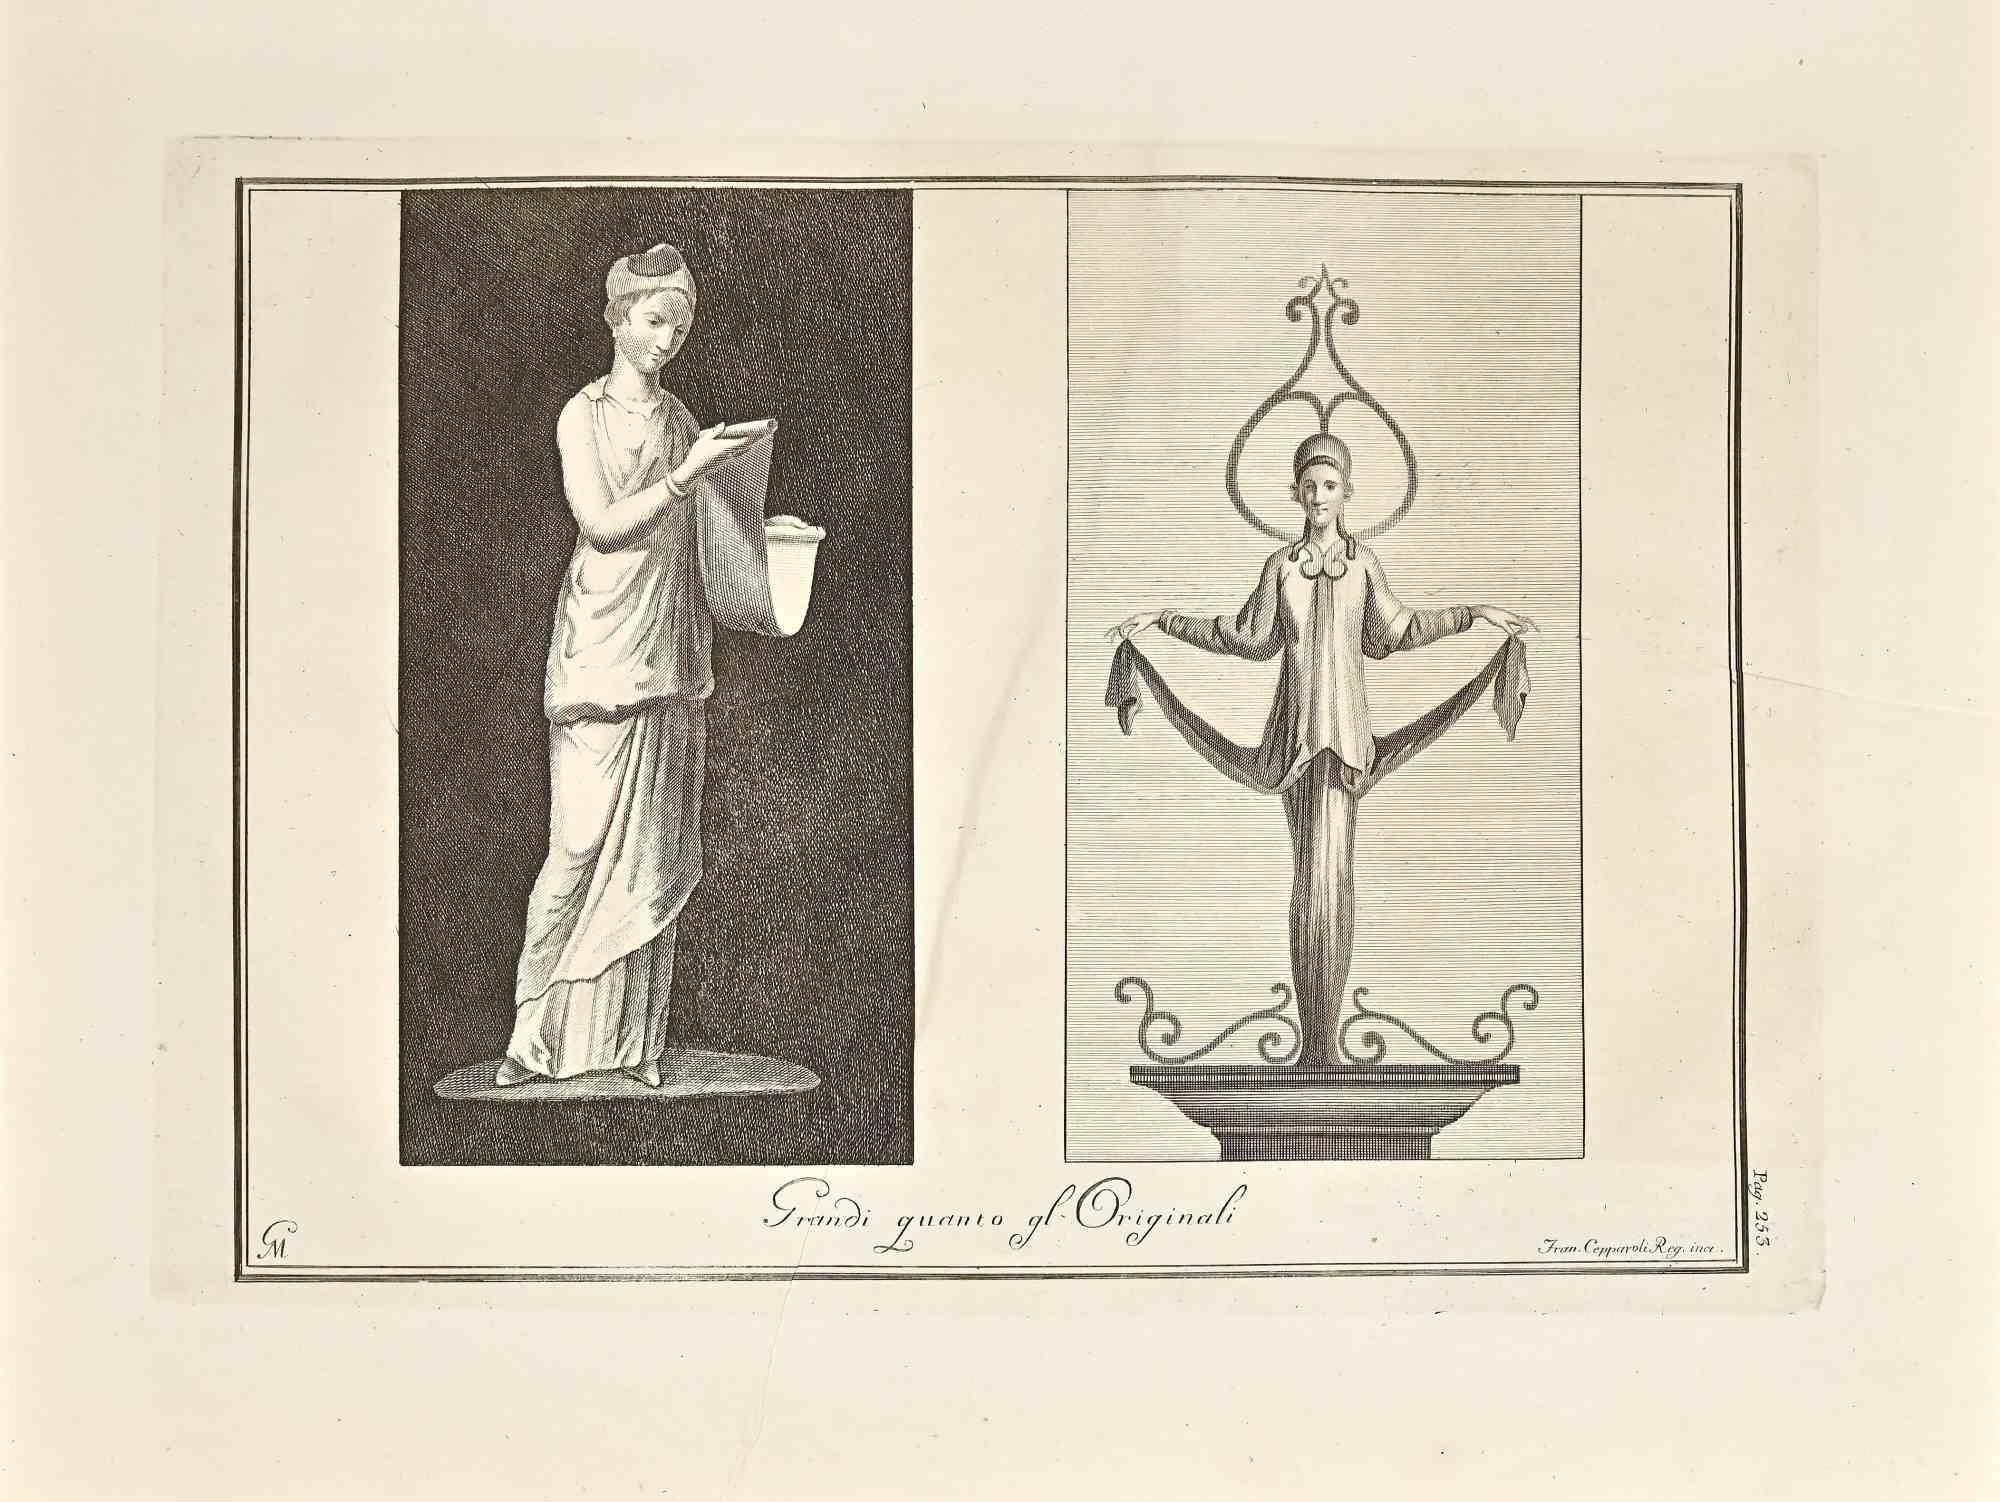 Francesco Cepparoli Figurative Print - Ancient Roman Scene - Etching F. Cepparoli  - 18th Century